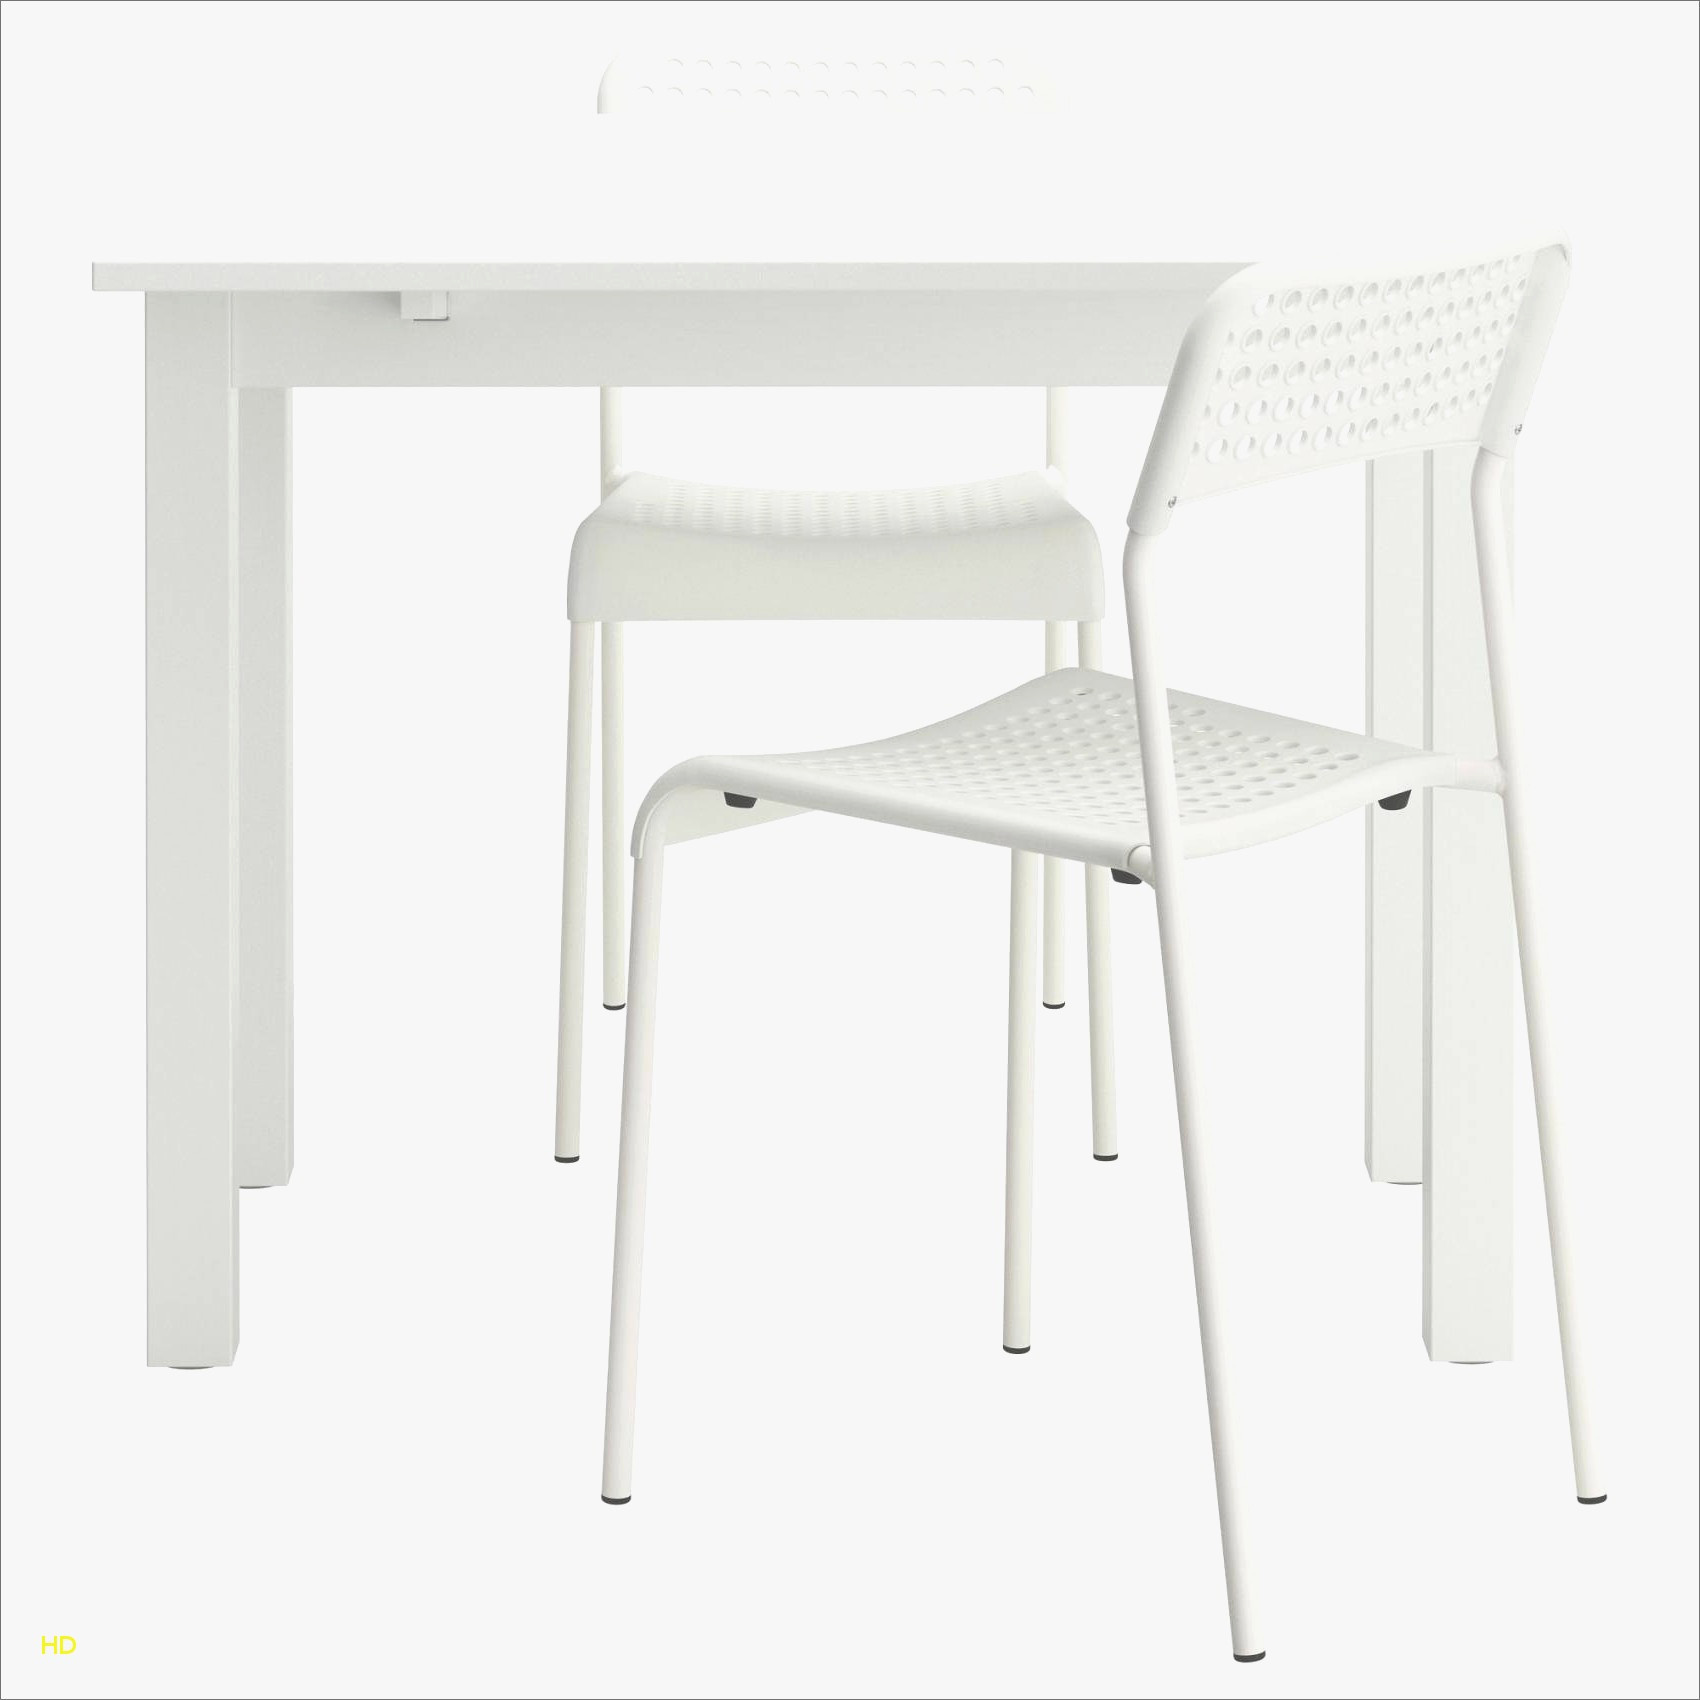 chaise transparente alinea nouveau chaise bistrot conforama inspire les 24 inspirant conforama chaises of chaise transparente alinea